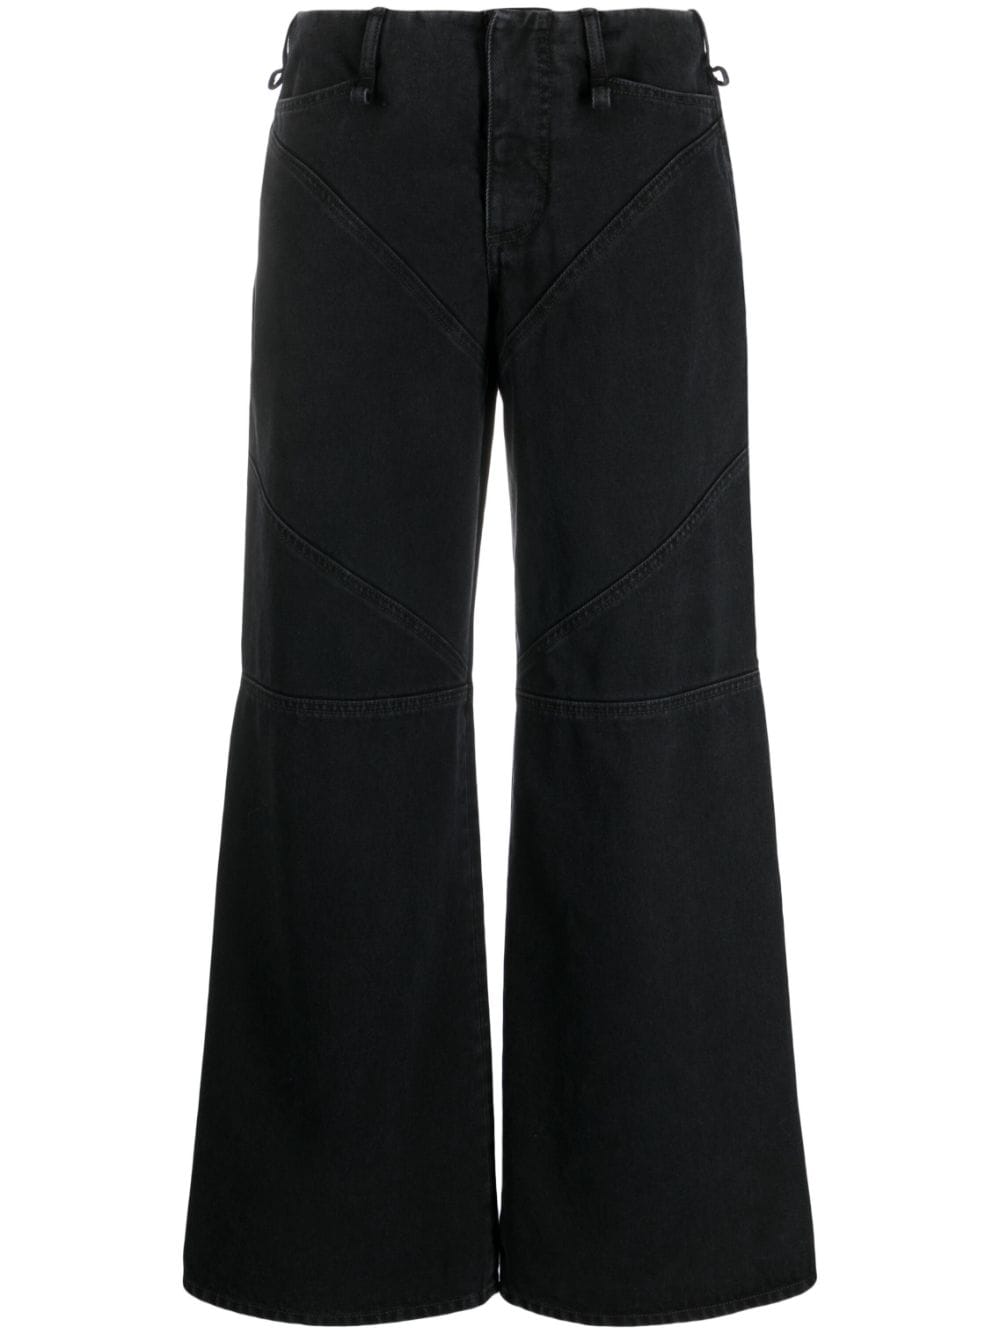 Ioannes low-rise wide-leg jeans - Black